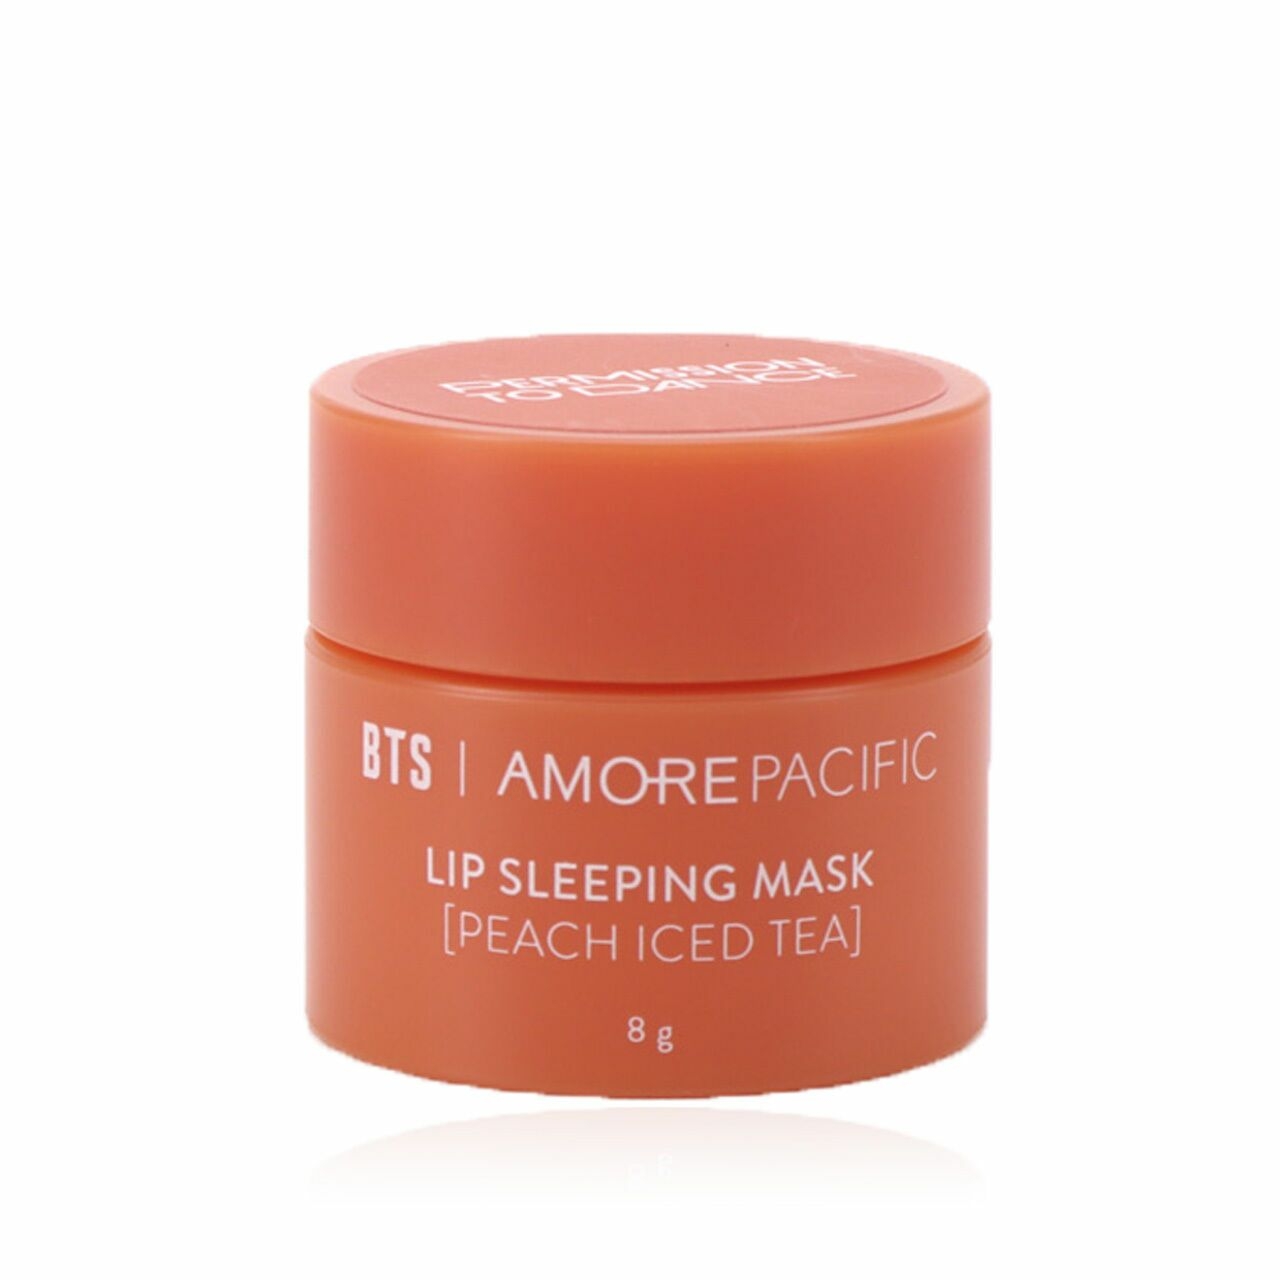 Laneige Bts Amore Pacific Lip Sleeping Mask - Peach Iced Tea Lips